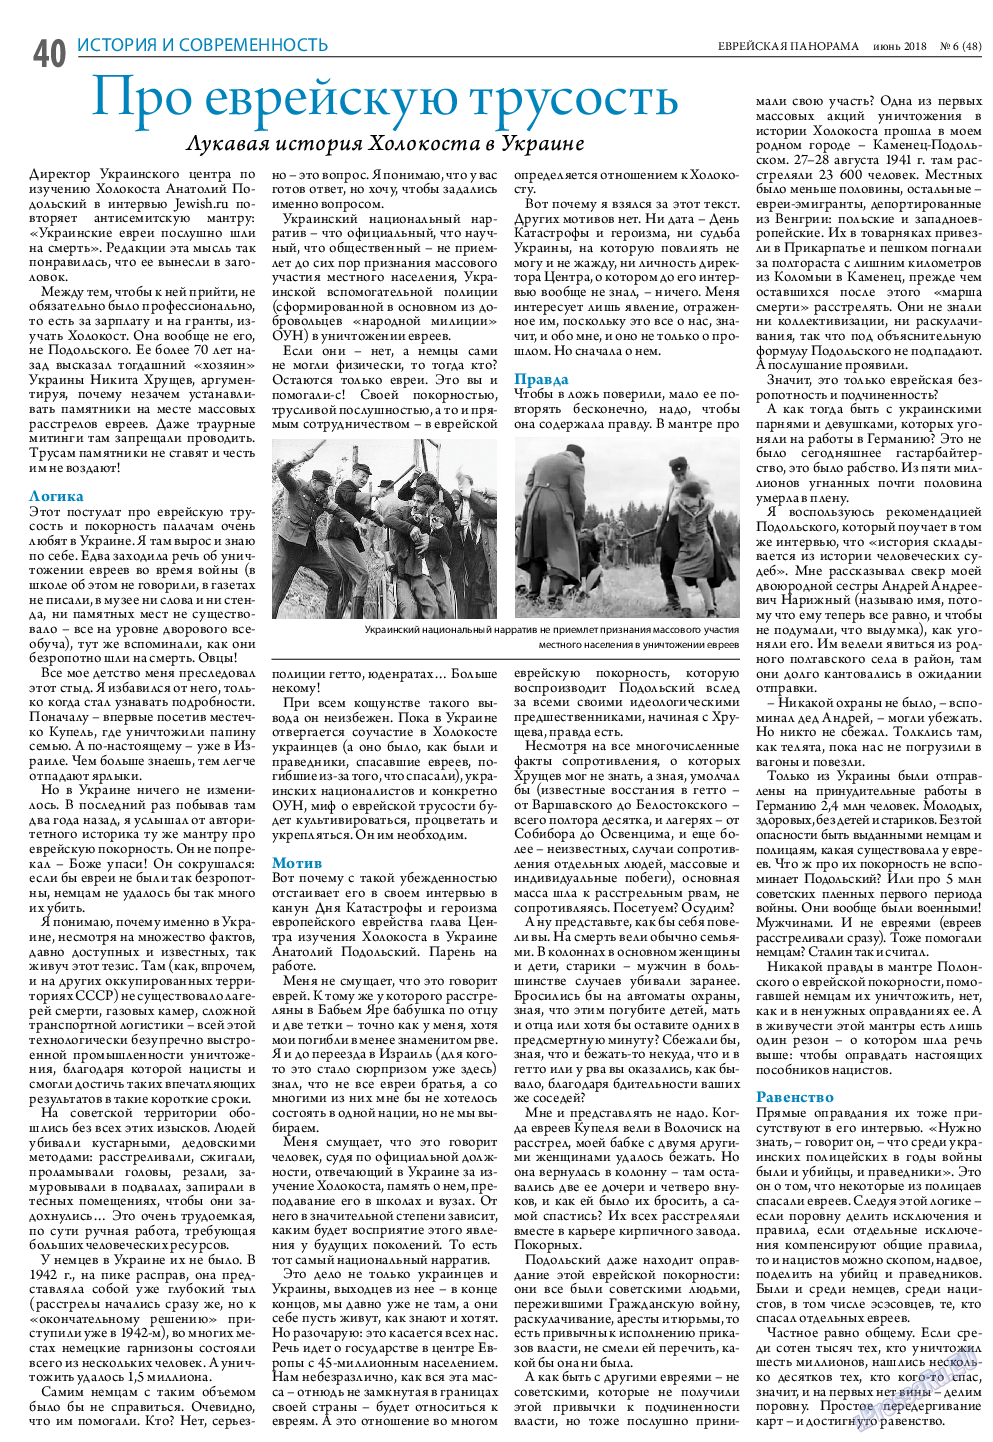 Еврейская панорама, газета. 2018 №6 стр.40